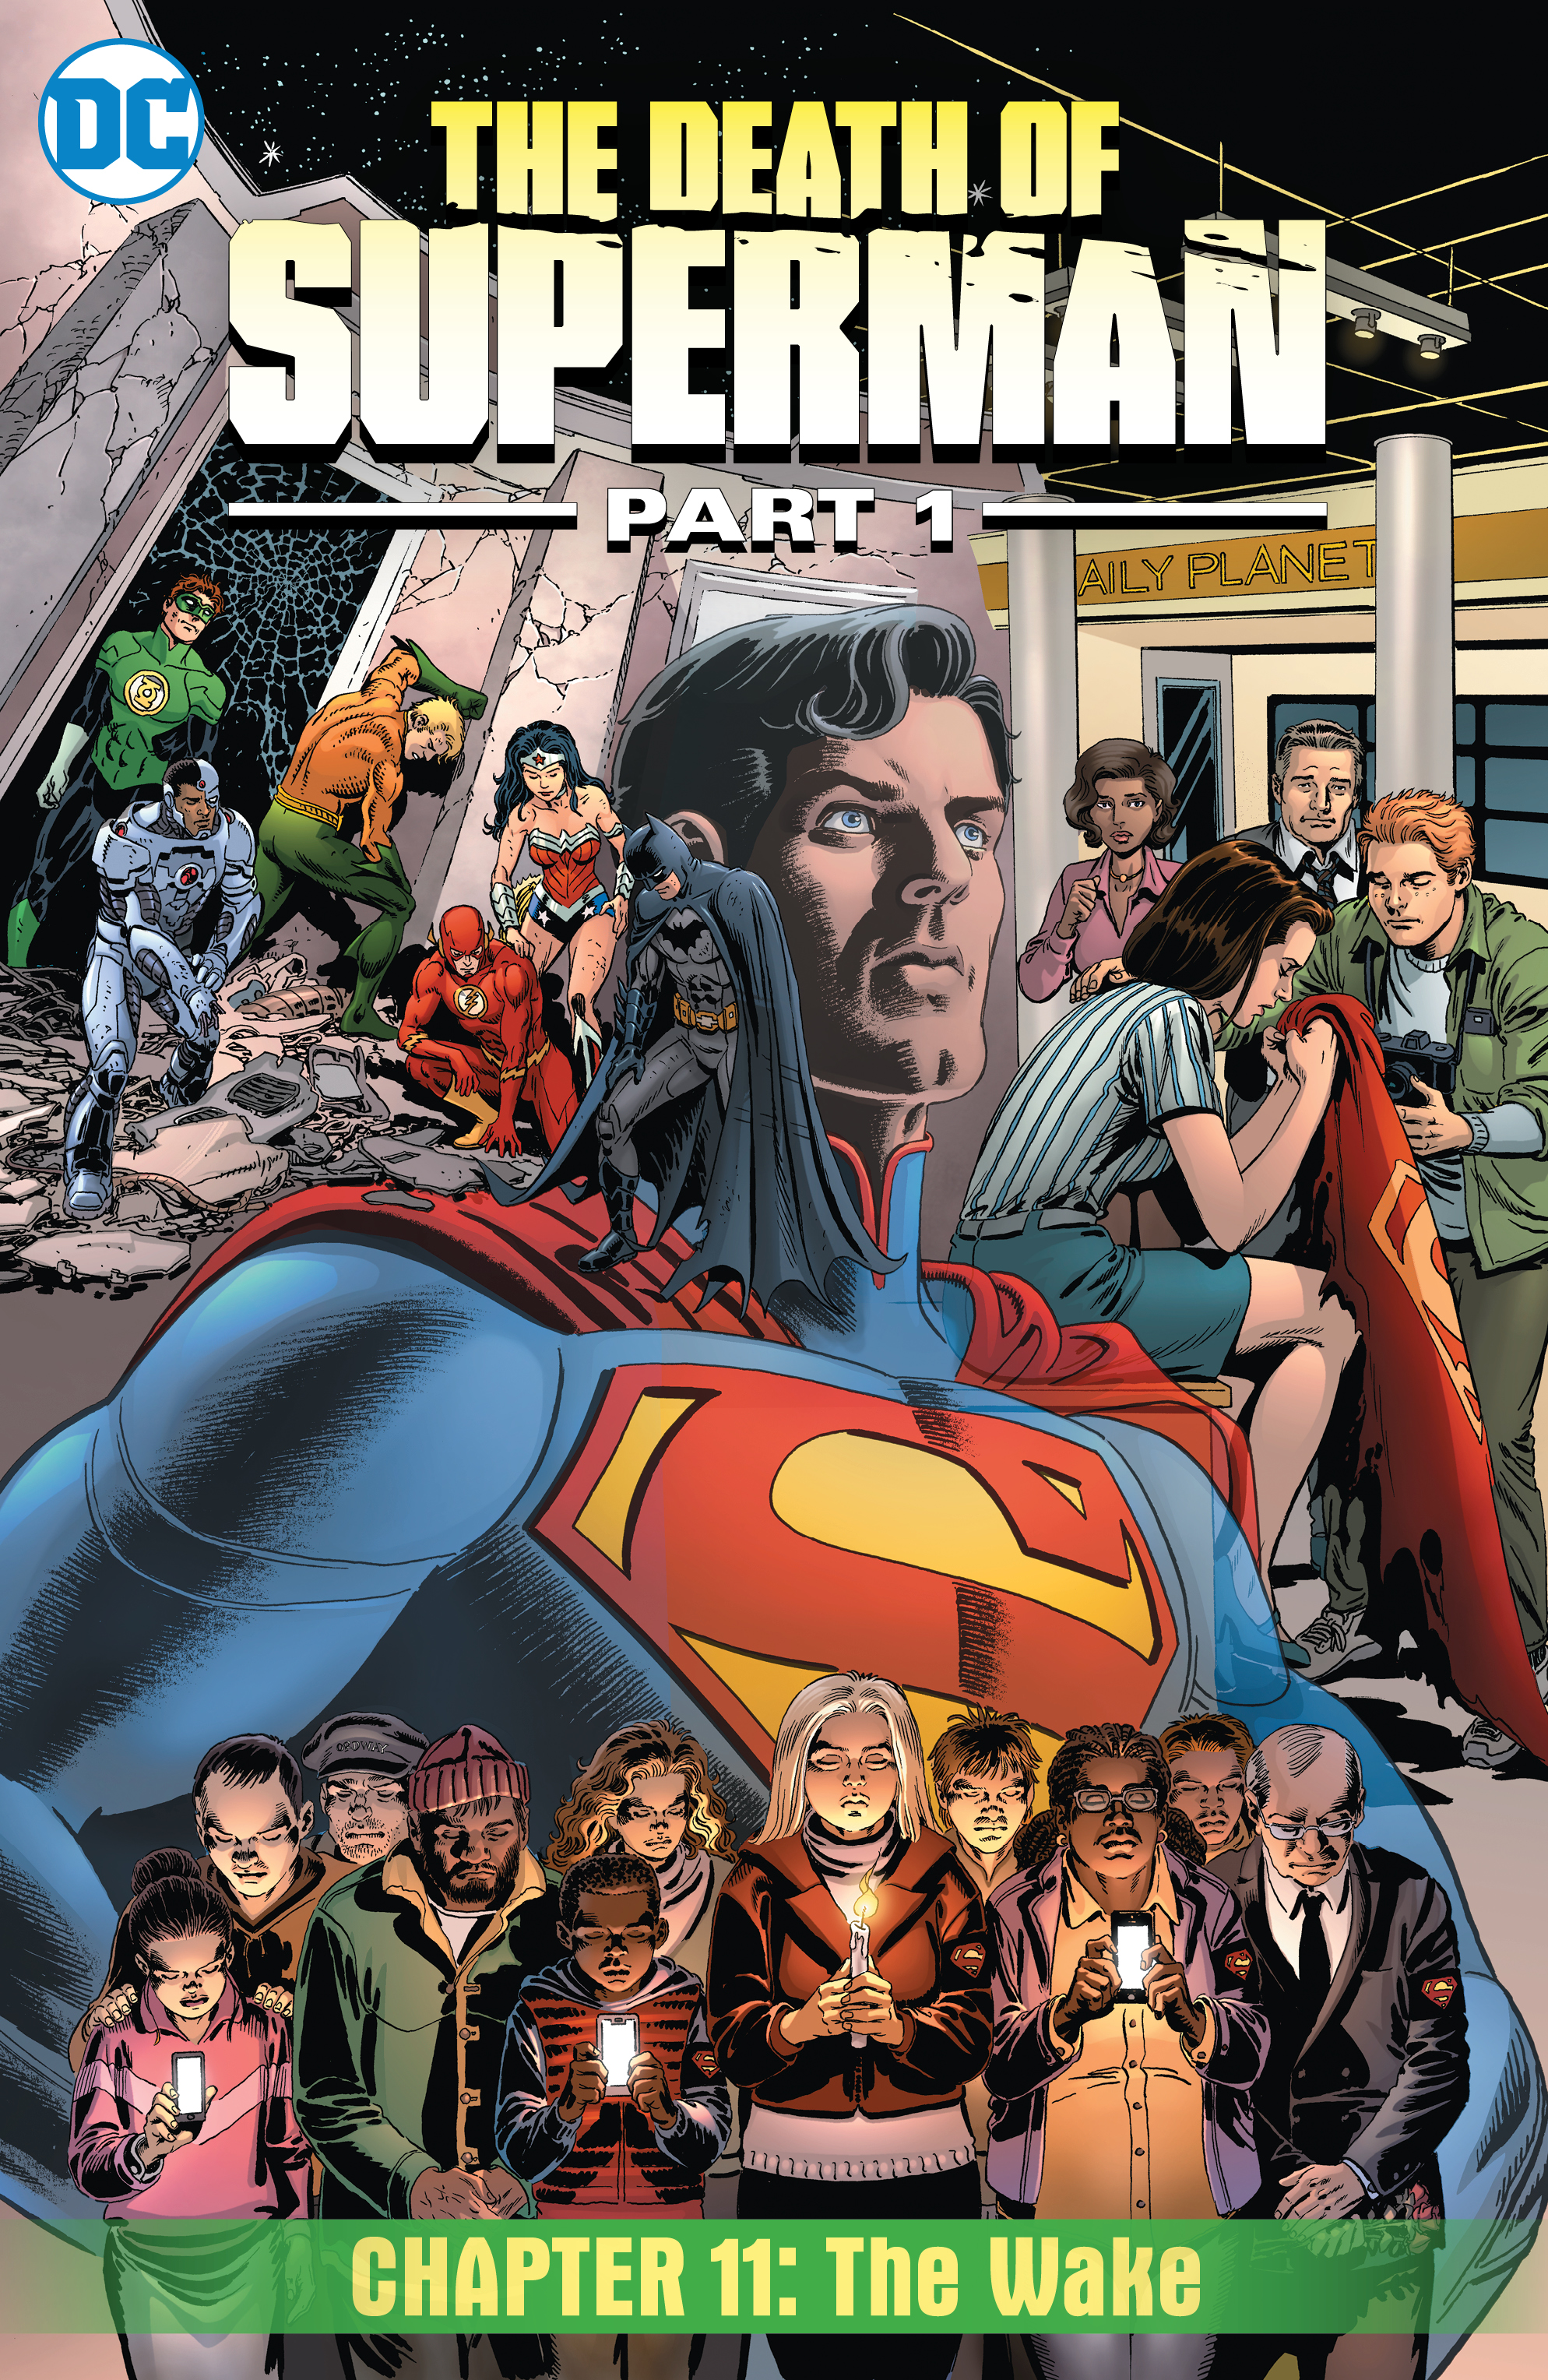 Death of Superman, Part 1 #11 preview images